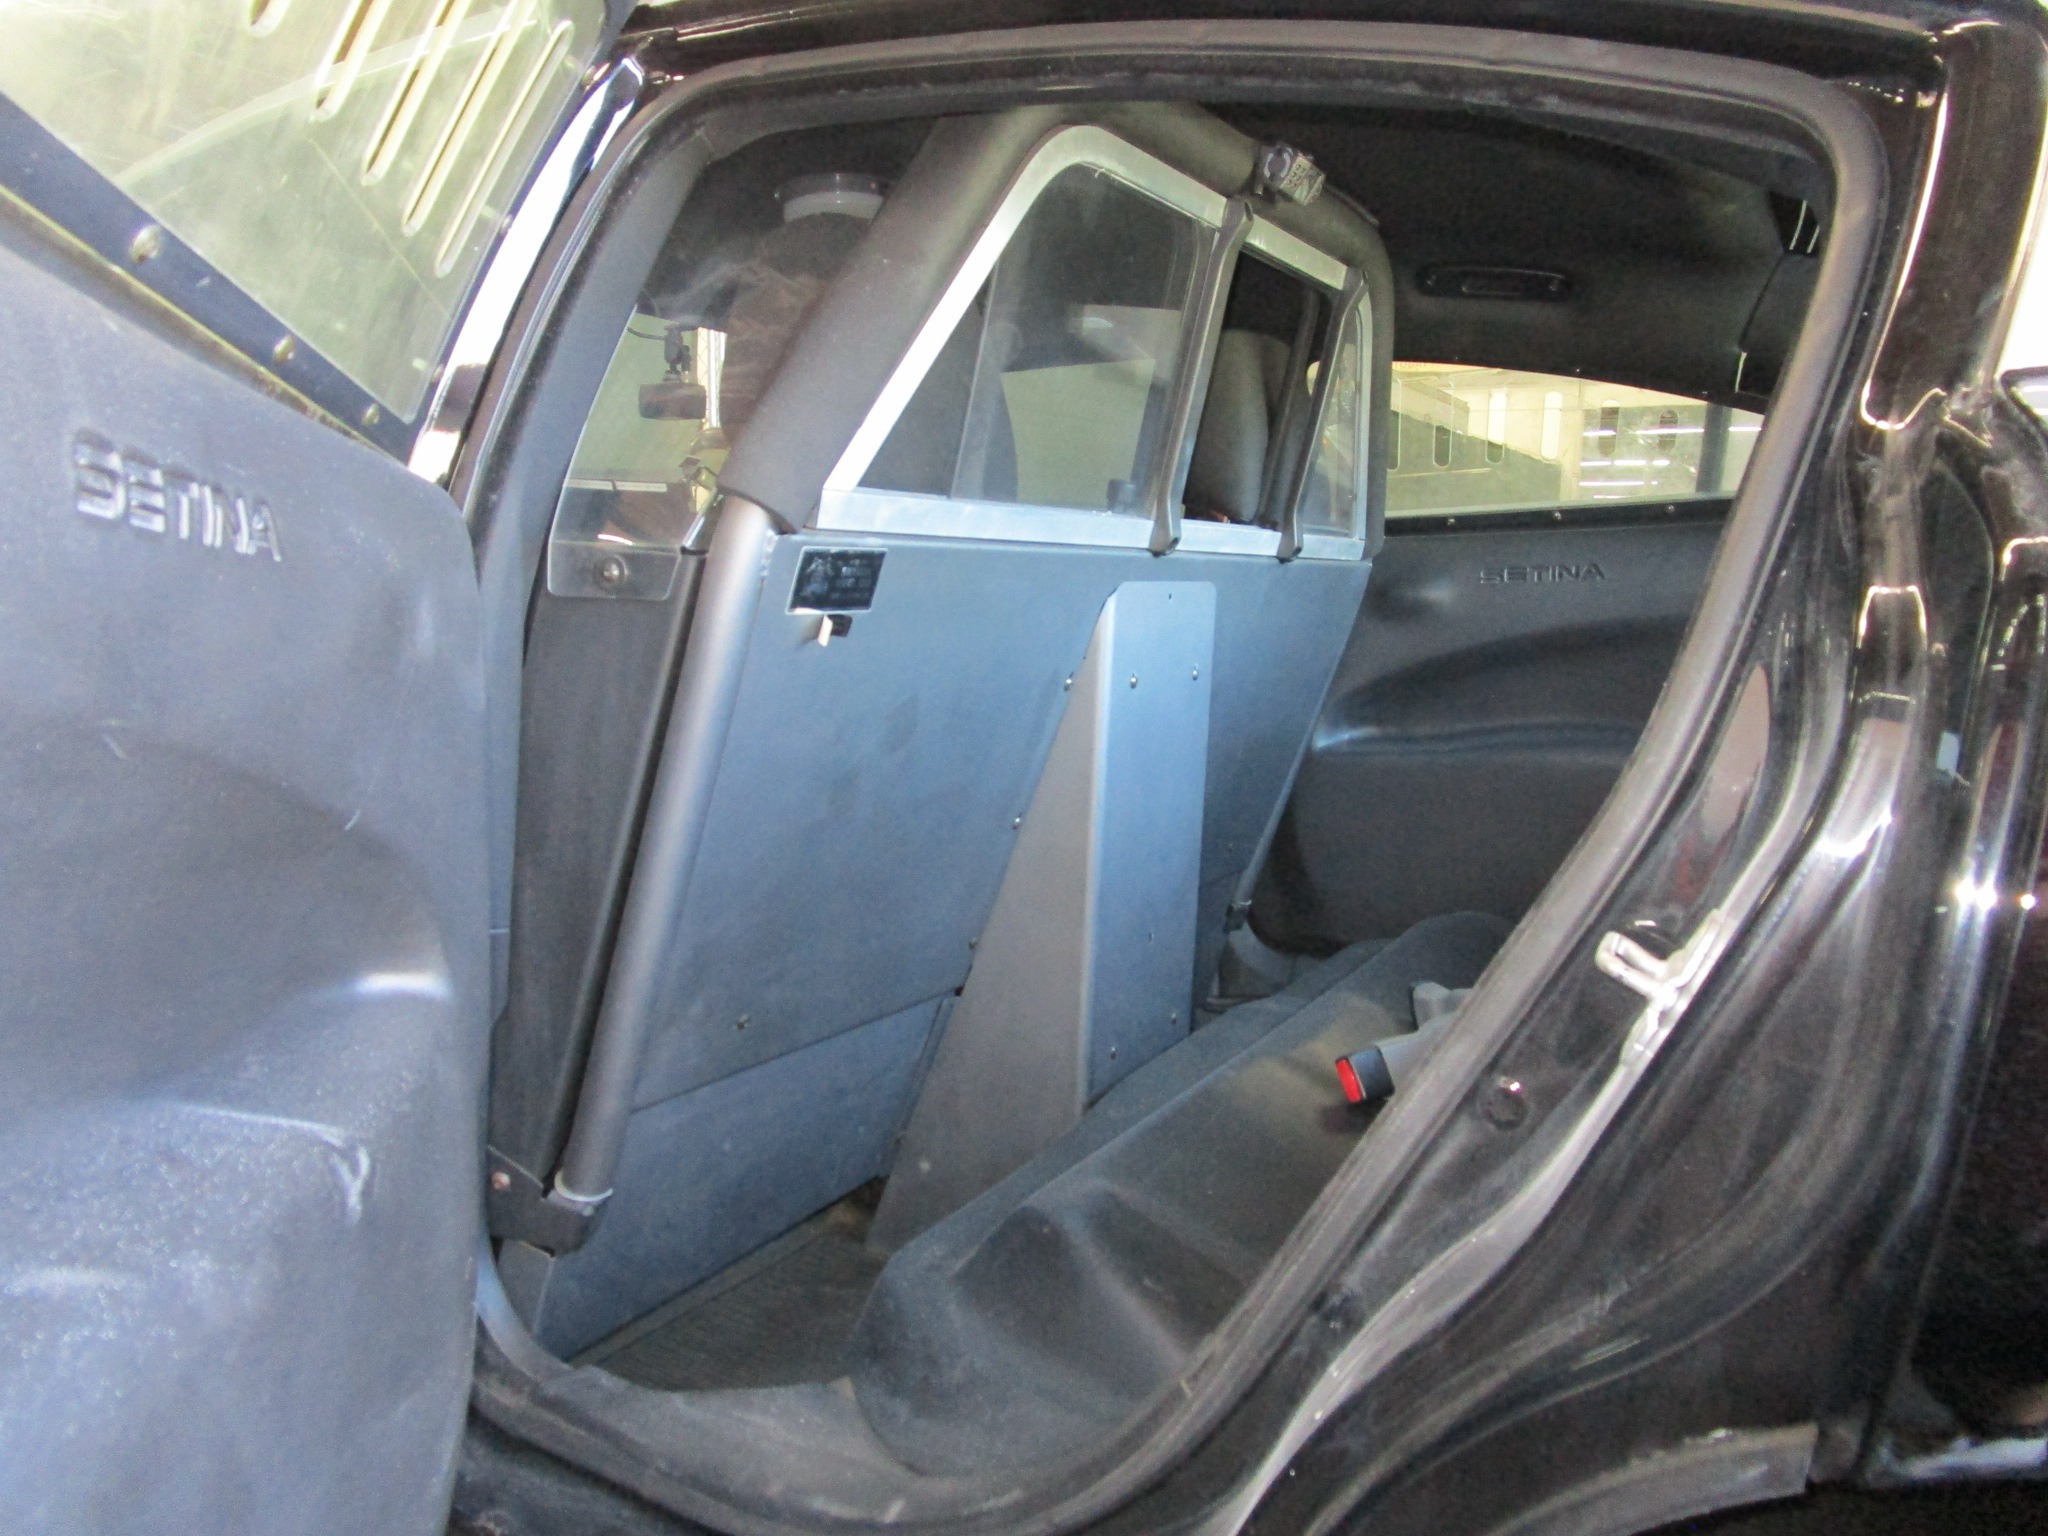 police car plastic back seat